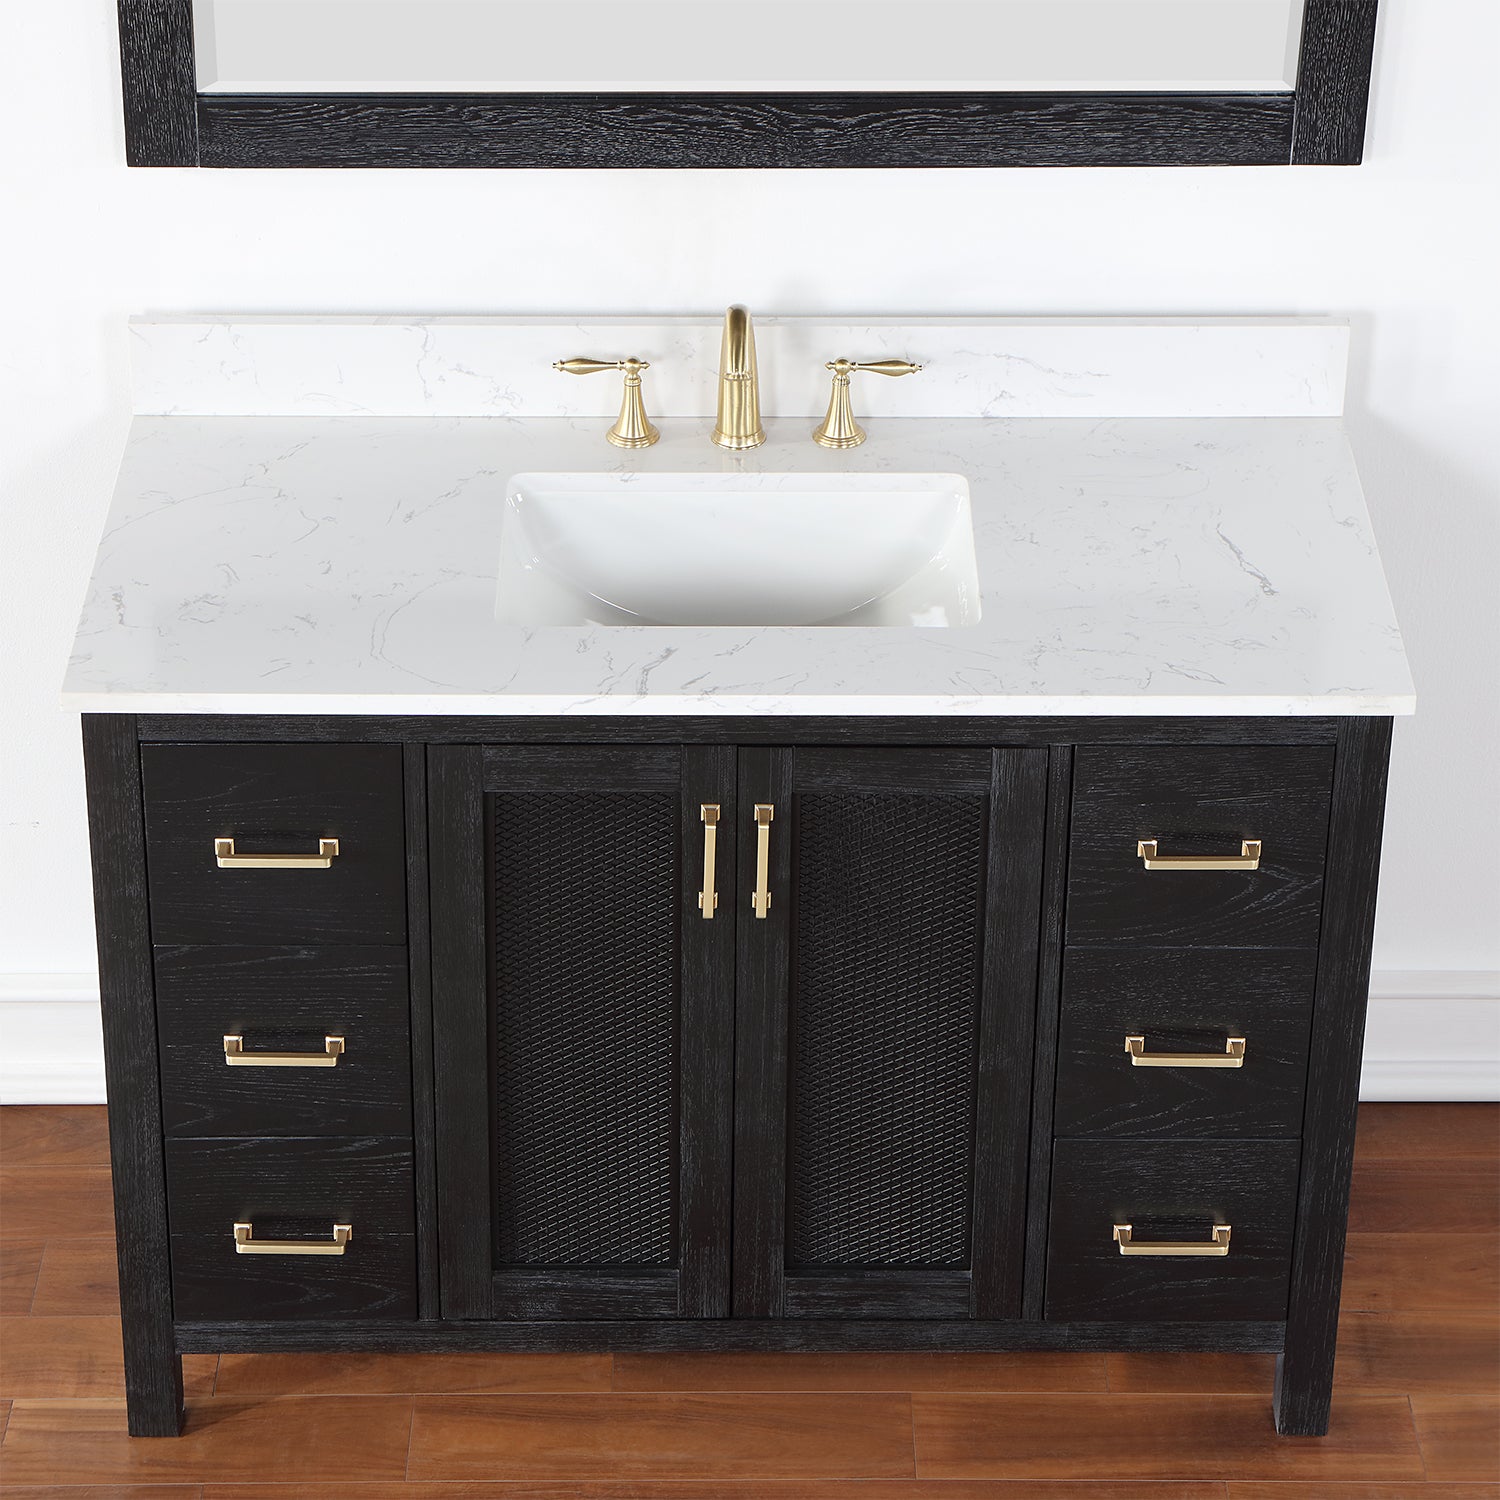 Hadiya 48" Single Bathroom Vanity Set with Aosta White Composite Stone Countertop